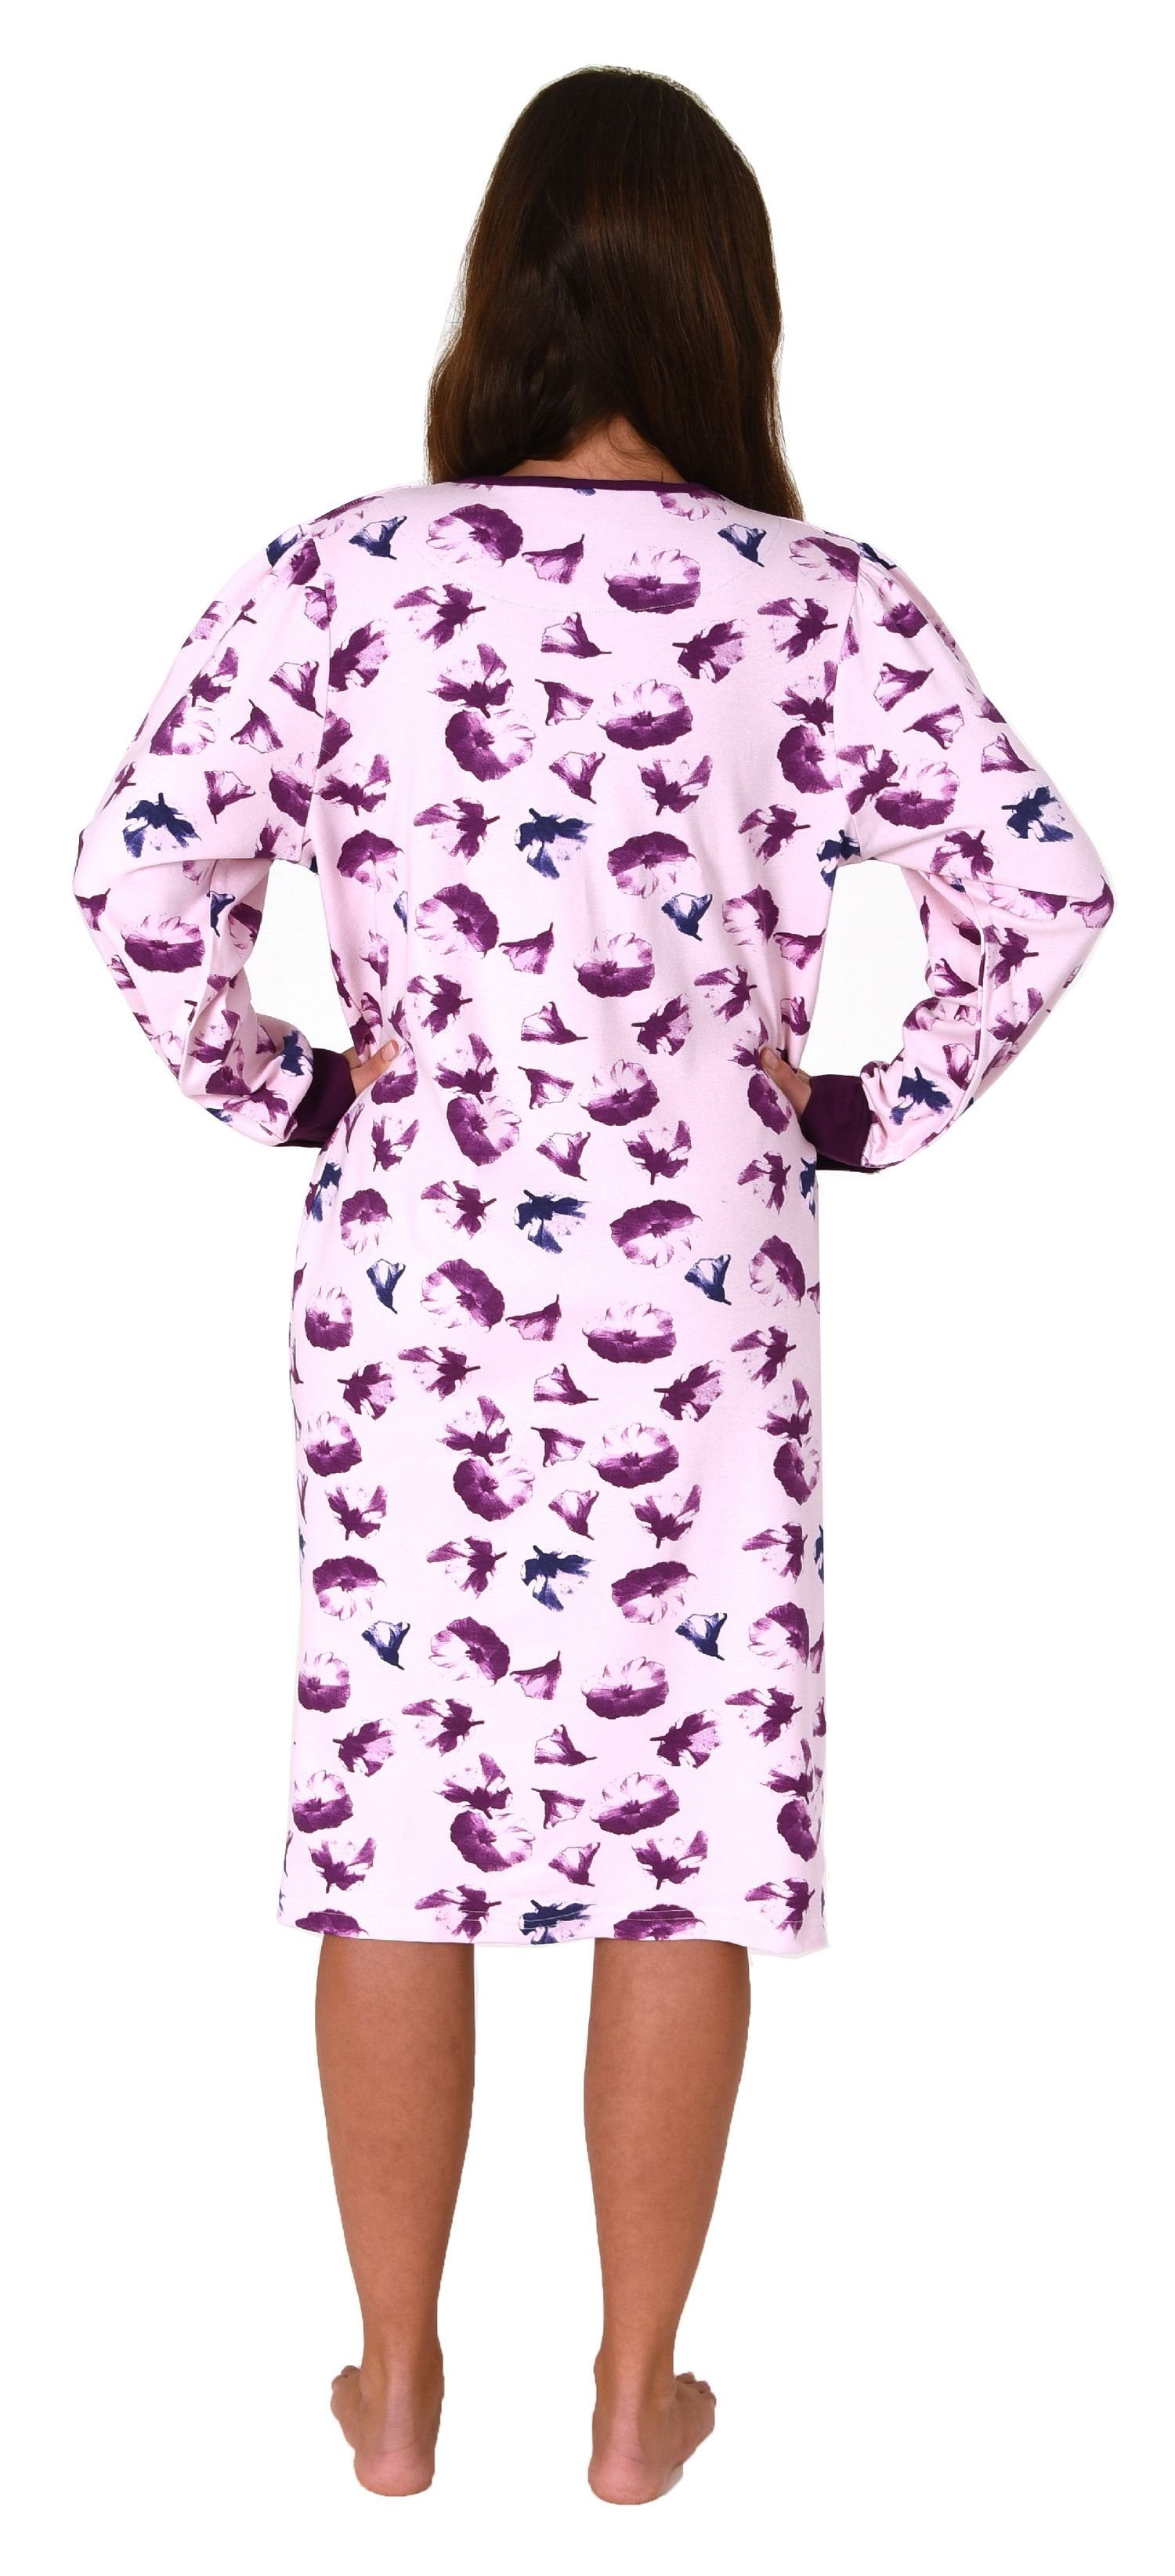 Kuschel Damen Edles Nachthemd Normann langarm Interlock-Qualität in Nachthemd rosa